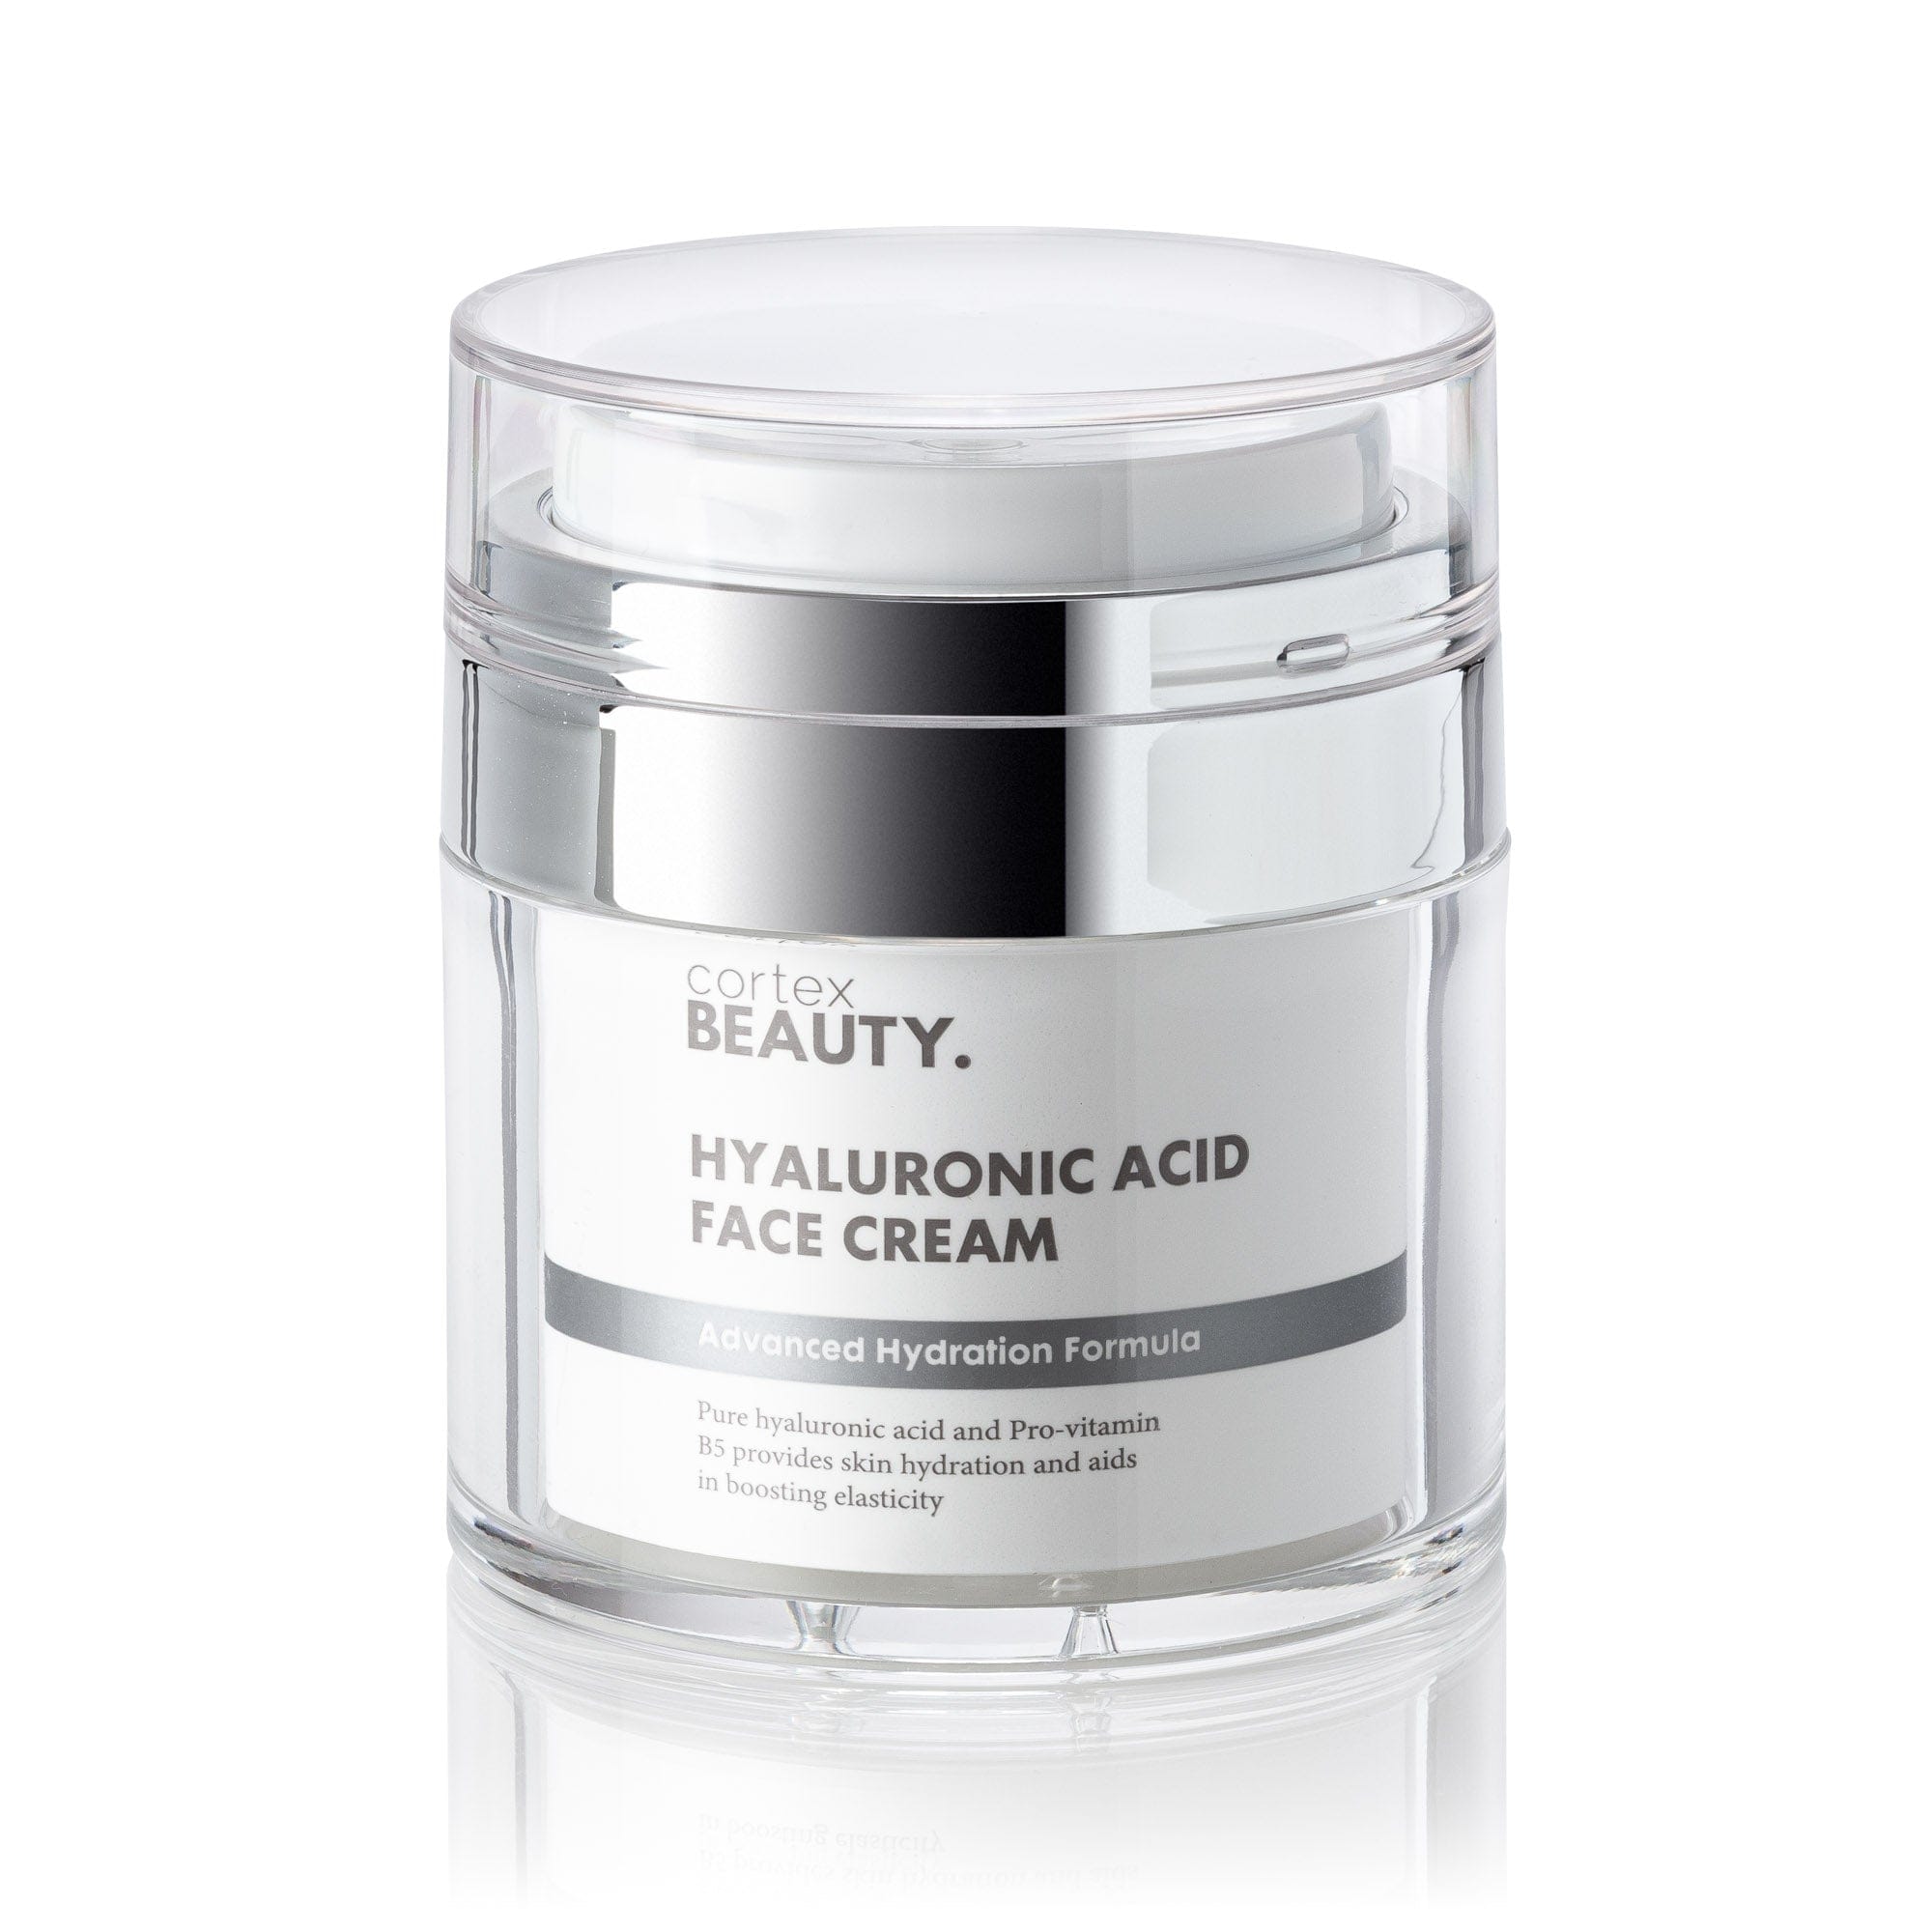 Cortex Beauty | Hyaluronic Acid Face Cream | 1.7oz